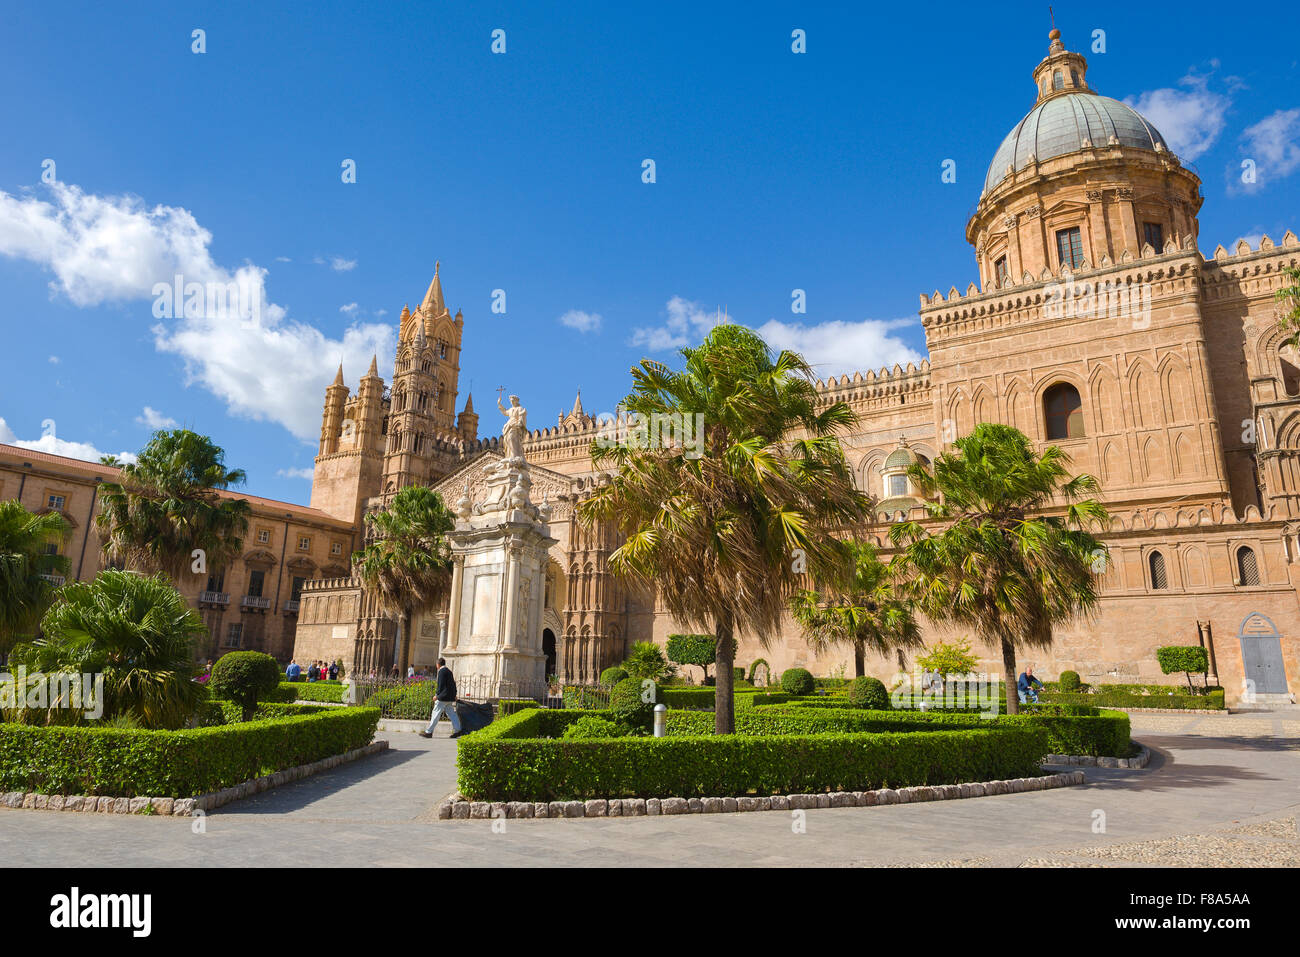 Palermo Cathedral, view of the 12th century cathedral, the Cattedrale Metropolitana della Santa Vergine Maria Assunta in Palermo, Sicily, Italy Stock Photo